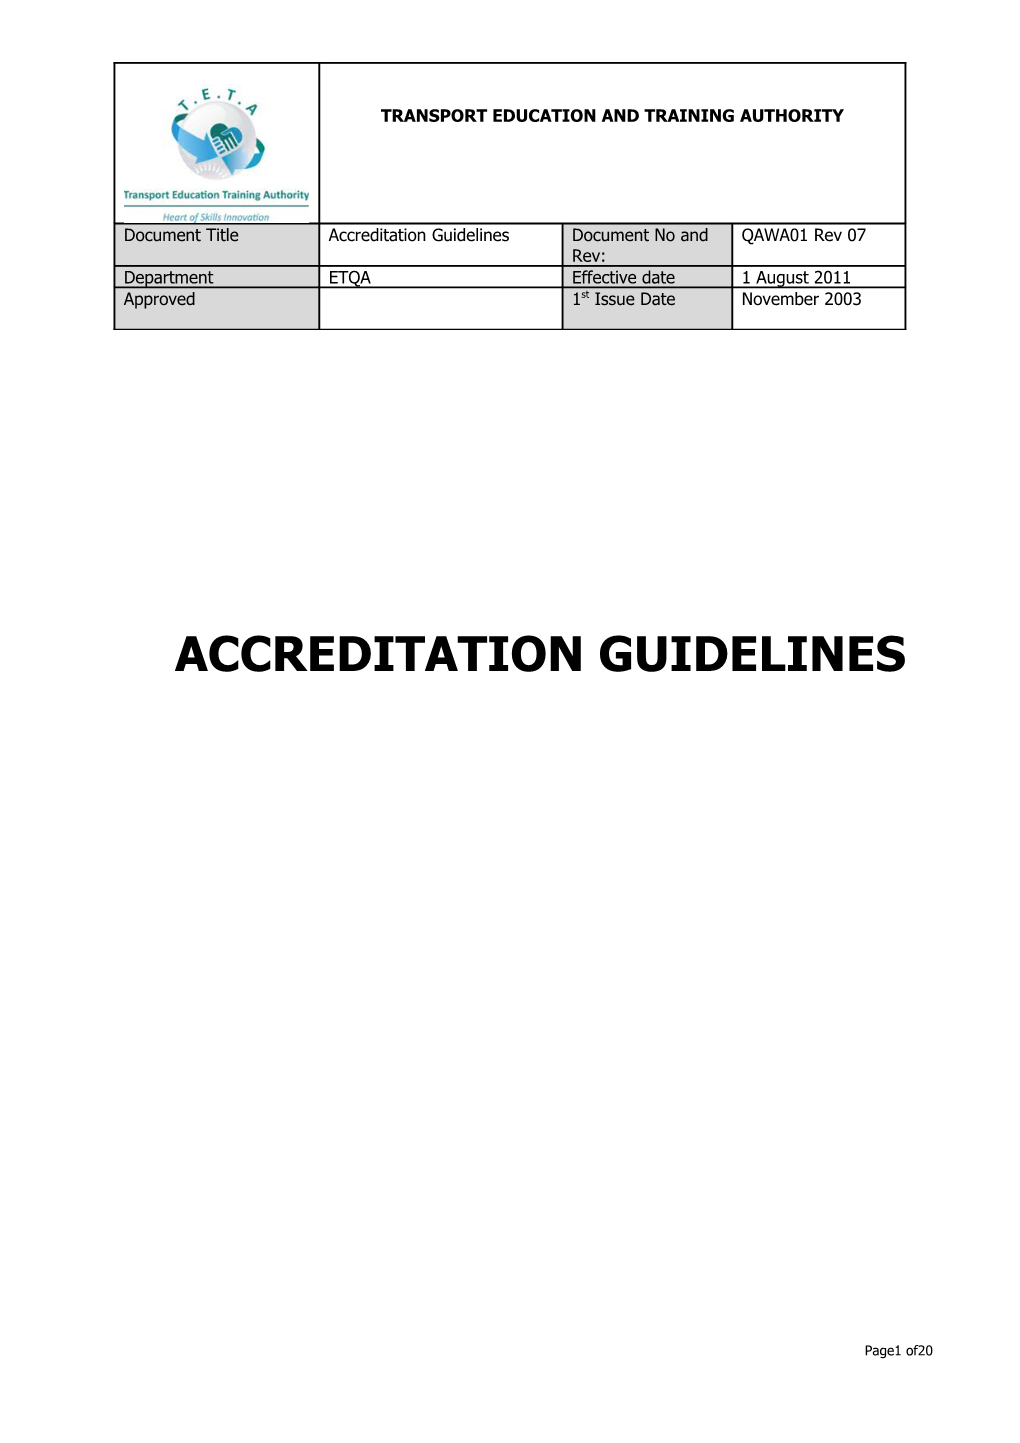 Teta Etqa Accreditation Guidelines